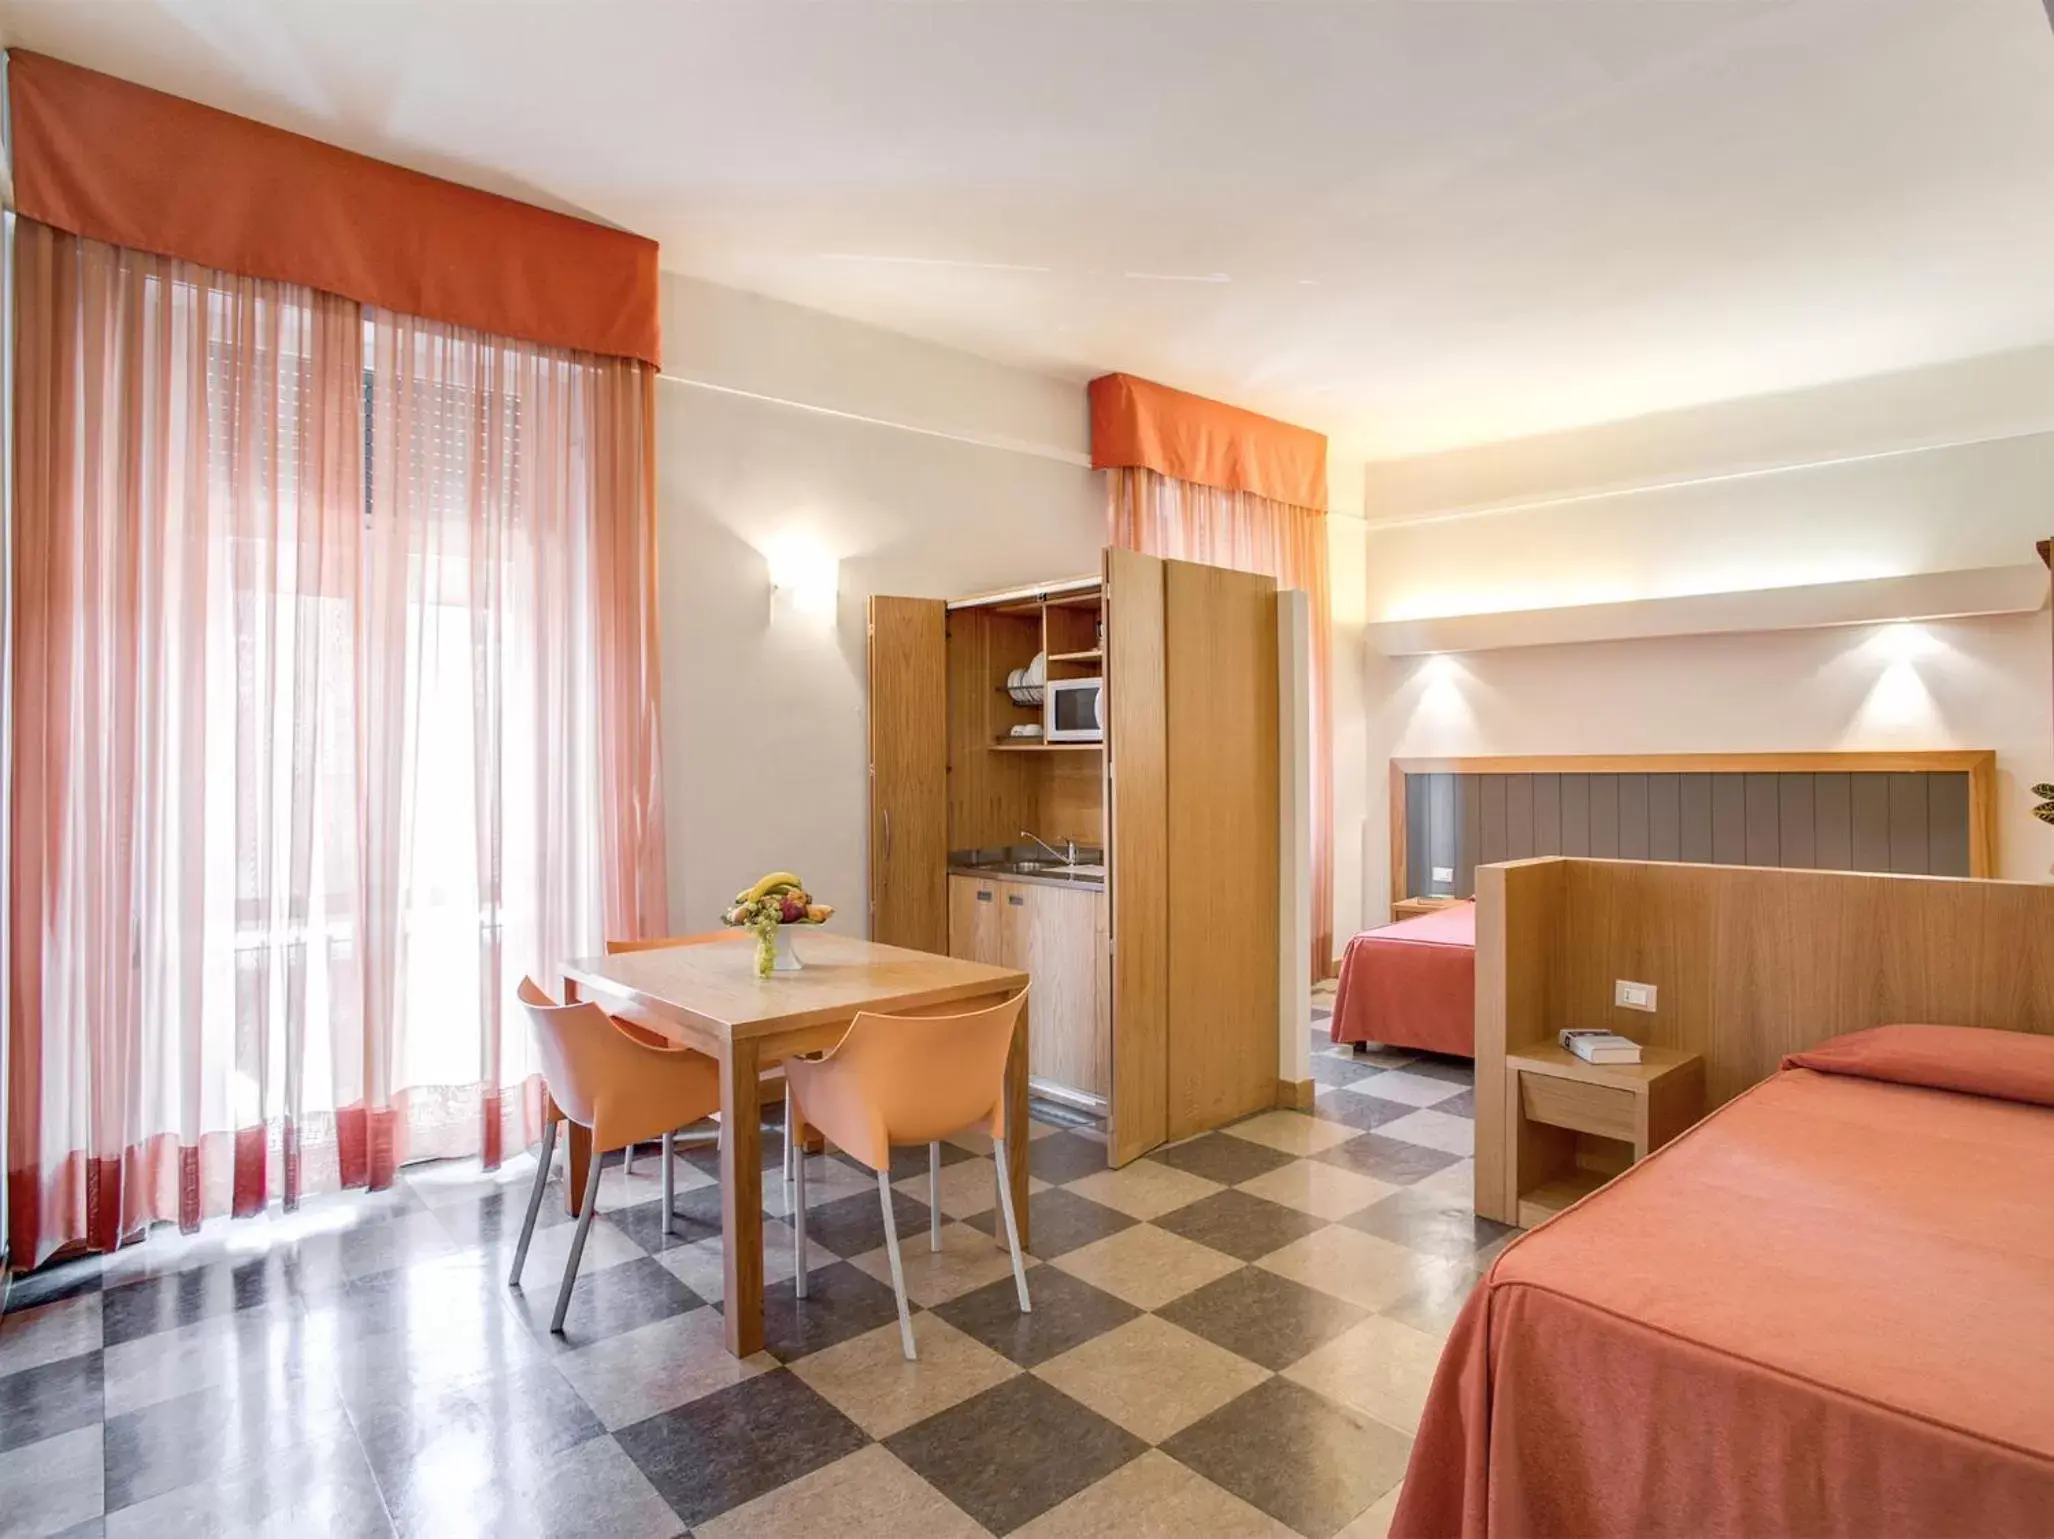 Photo of the whole room, Dining Area in Hotel Delle Nazioni